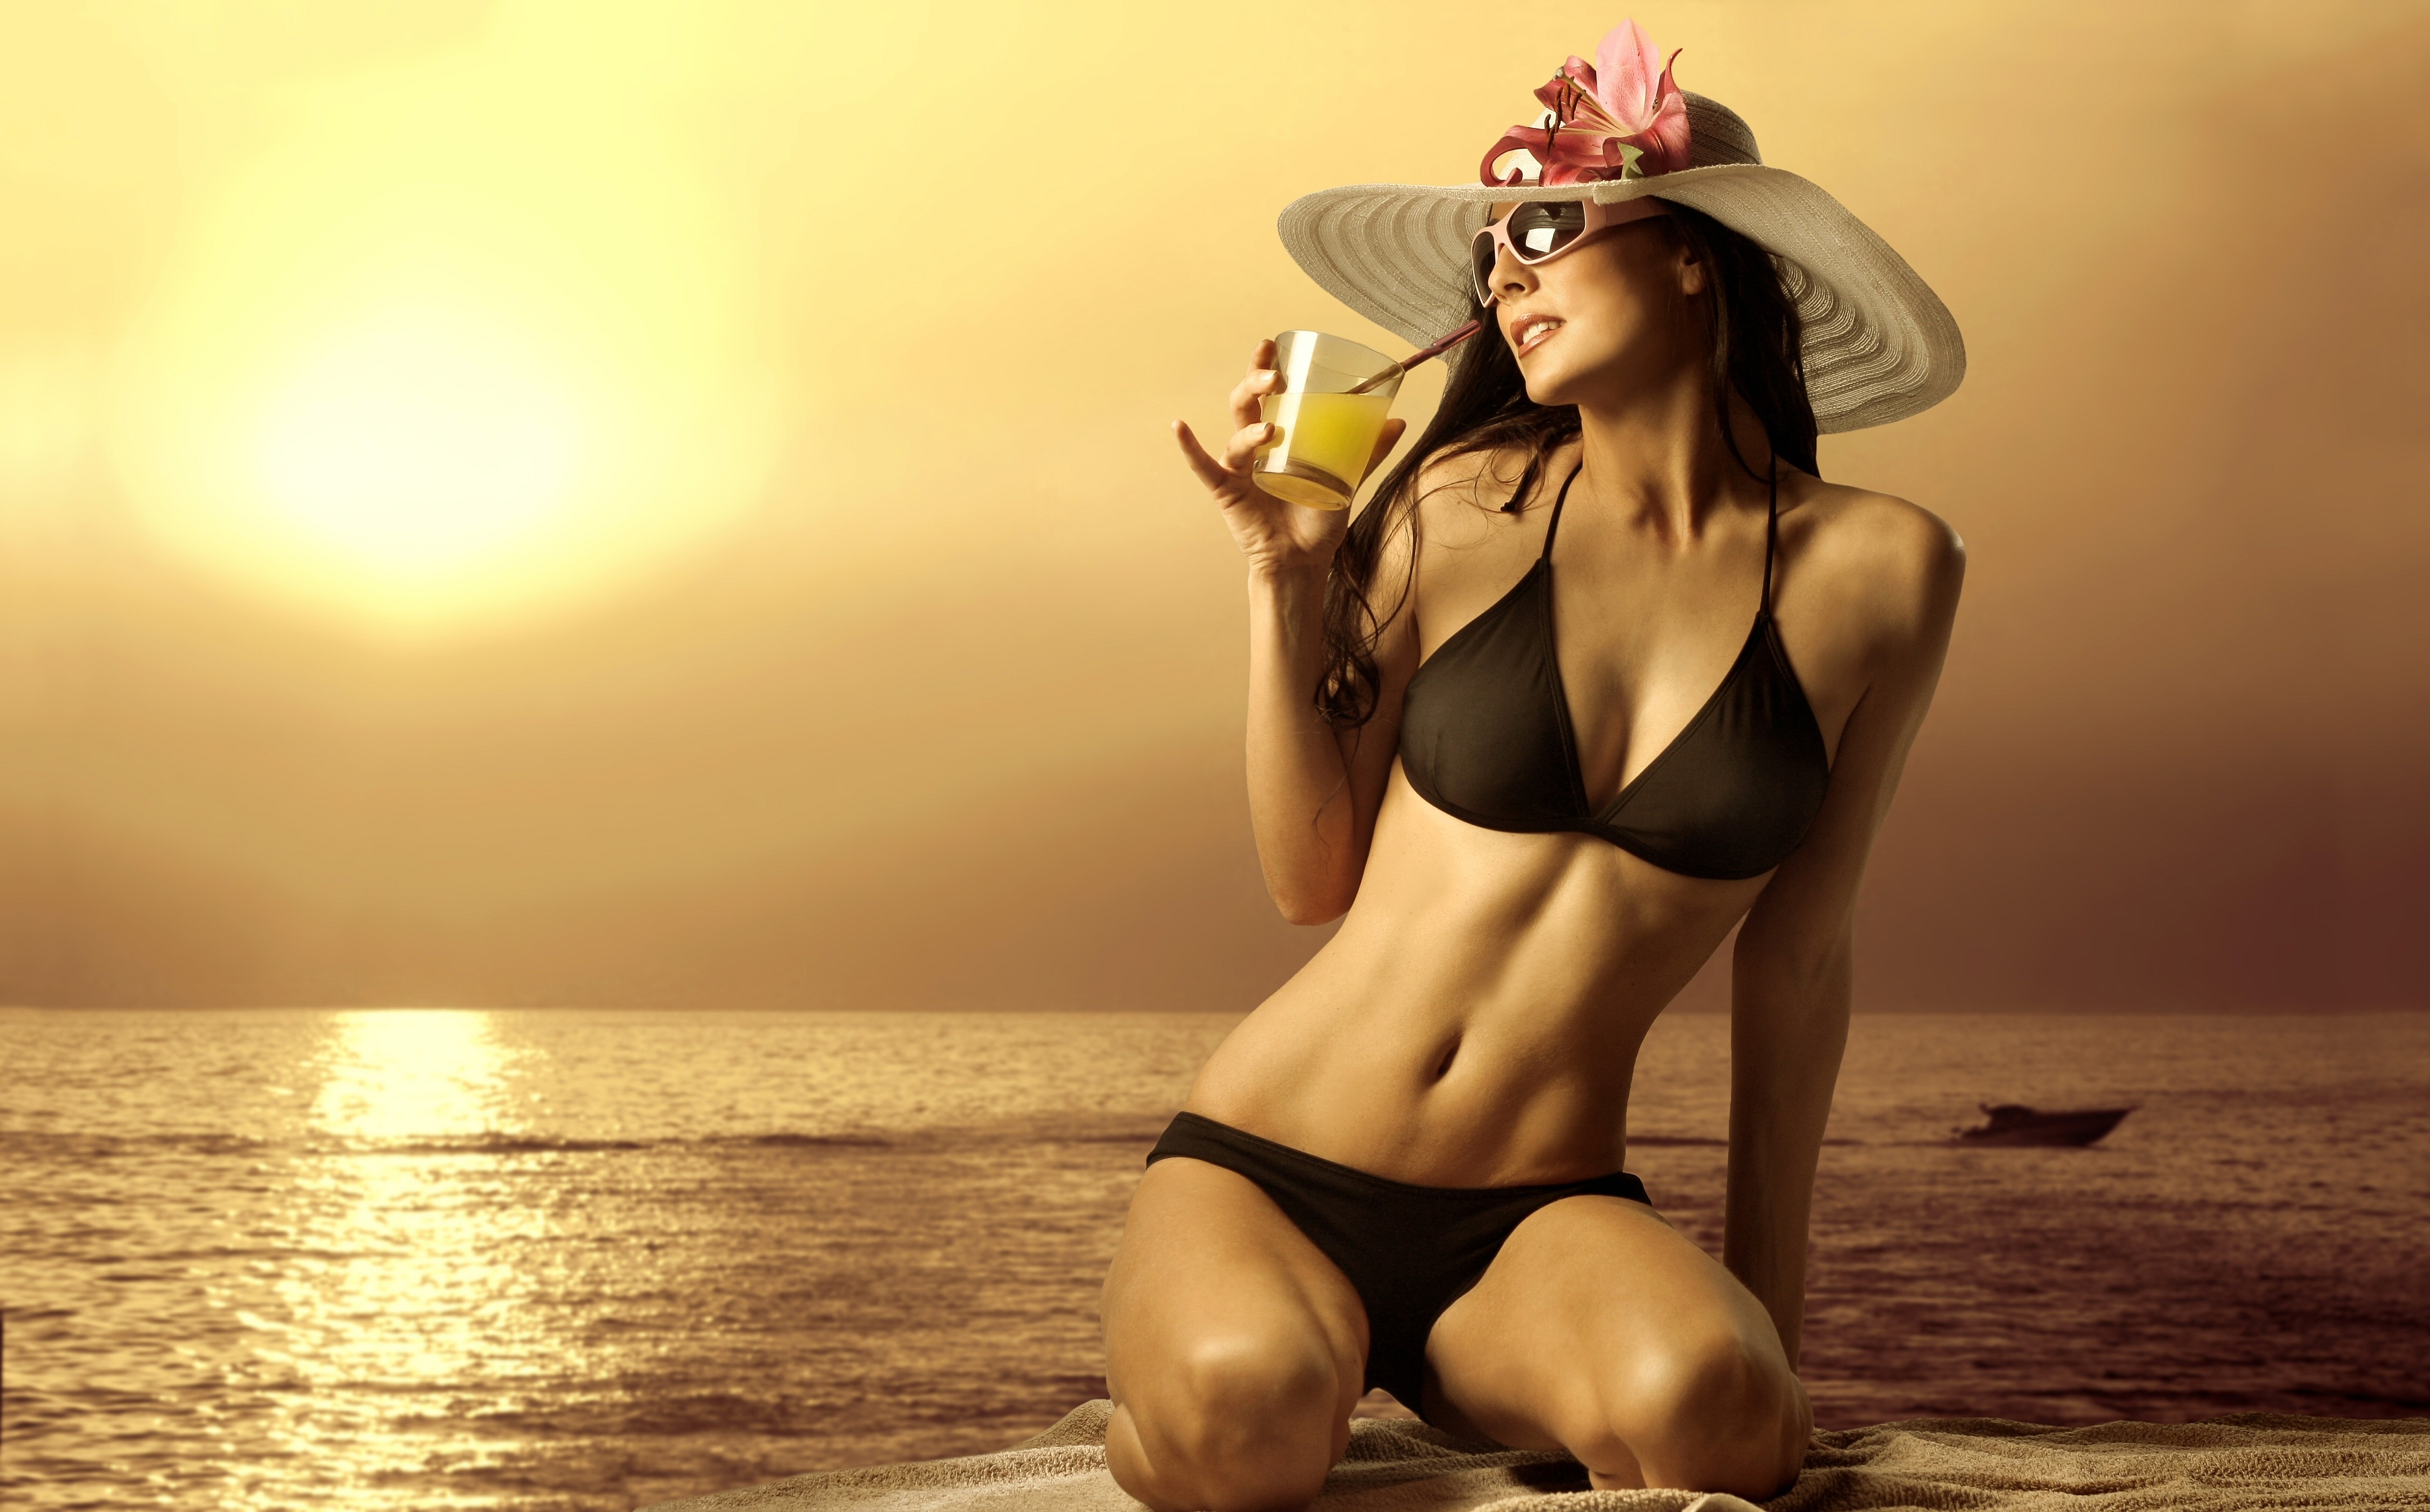 Beautiful Girl On The Beach Download Free Widescreen